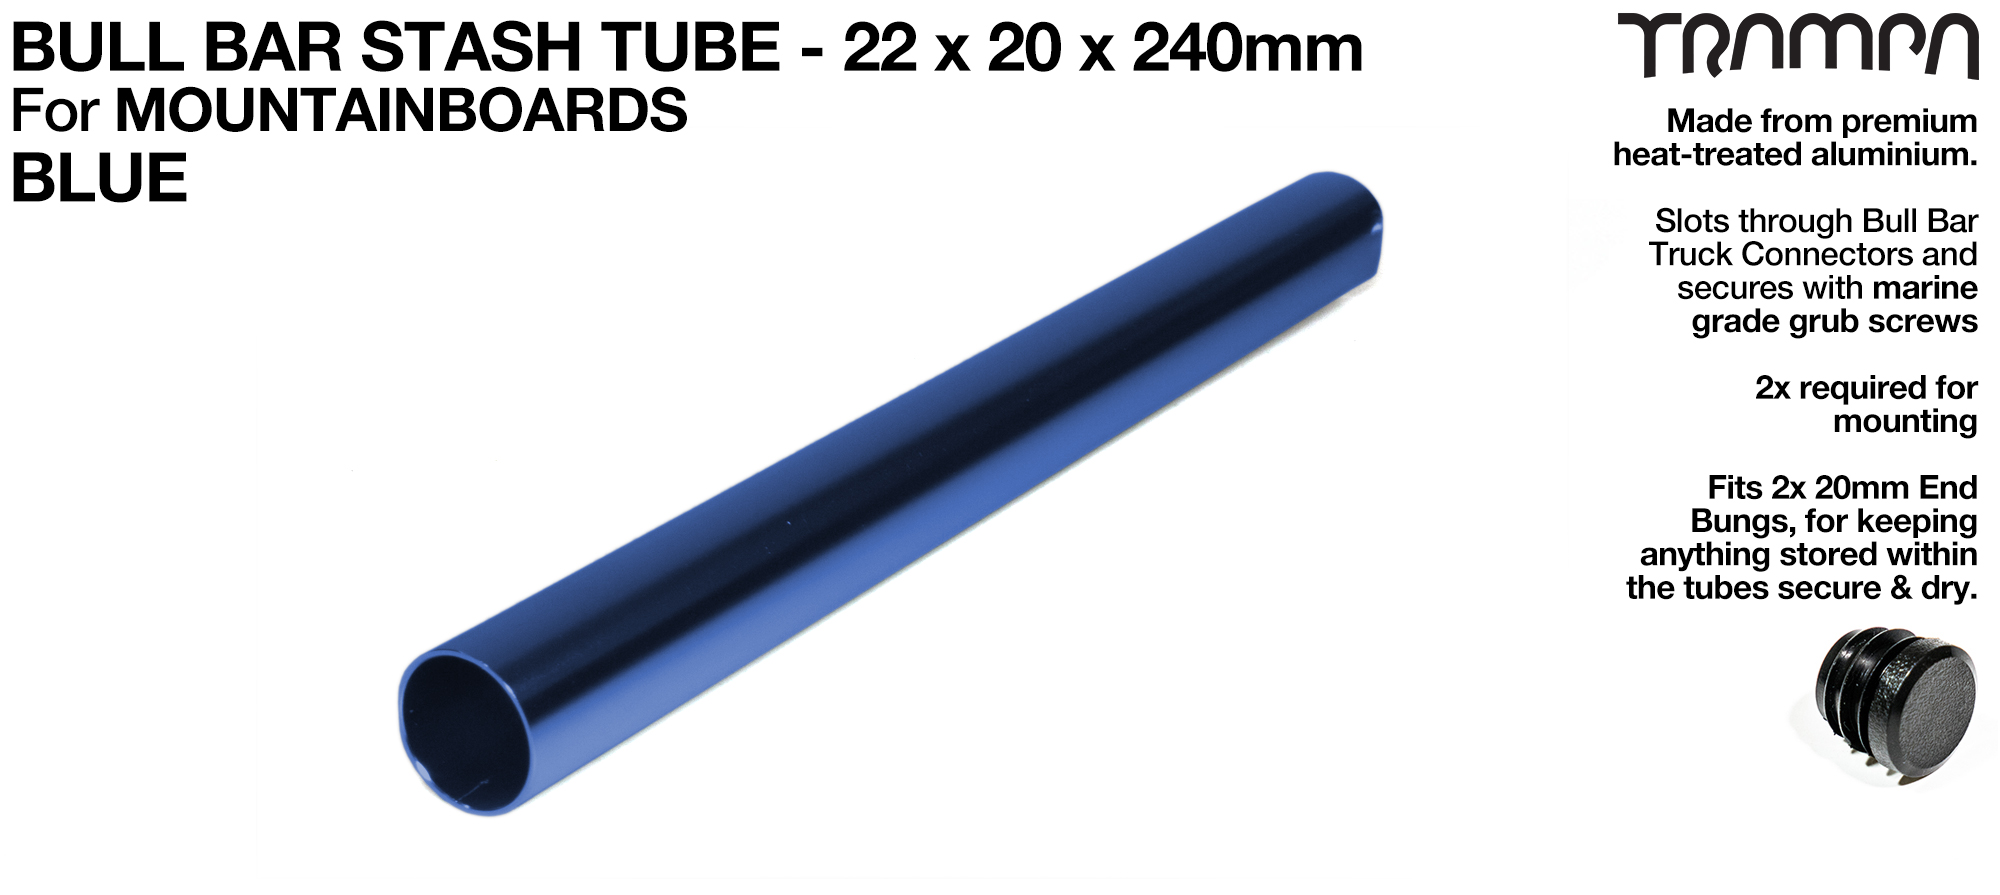 Mountainboard Bull Bar Hollow Aluminium Stash Tube - BLUE 22x20x240mm 